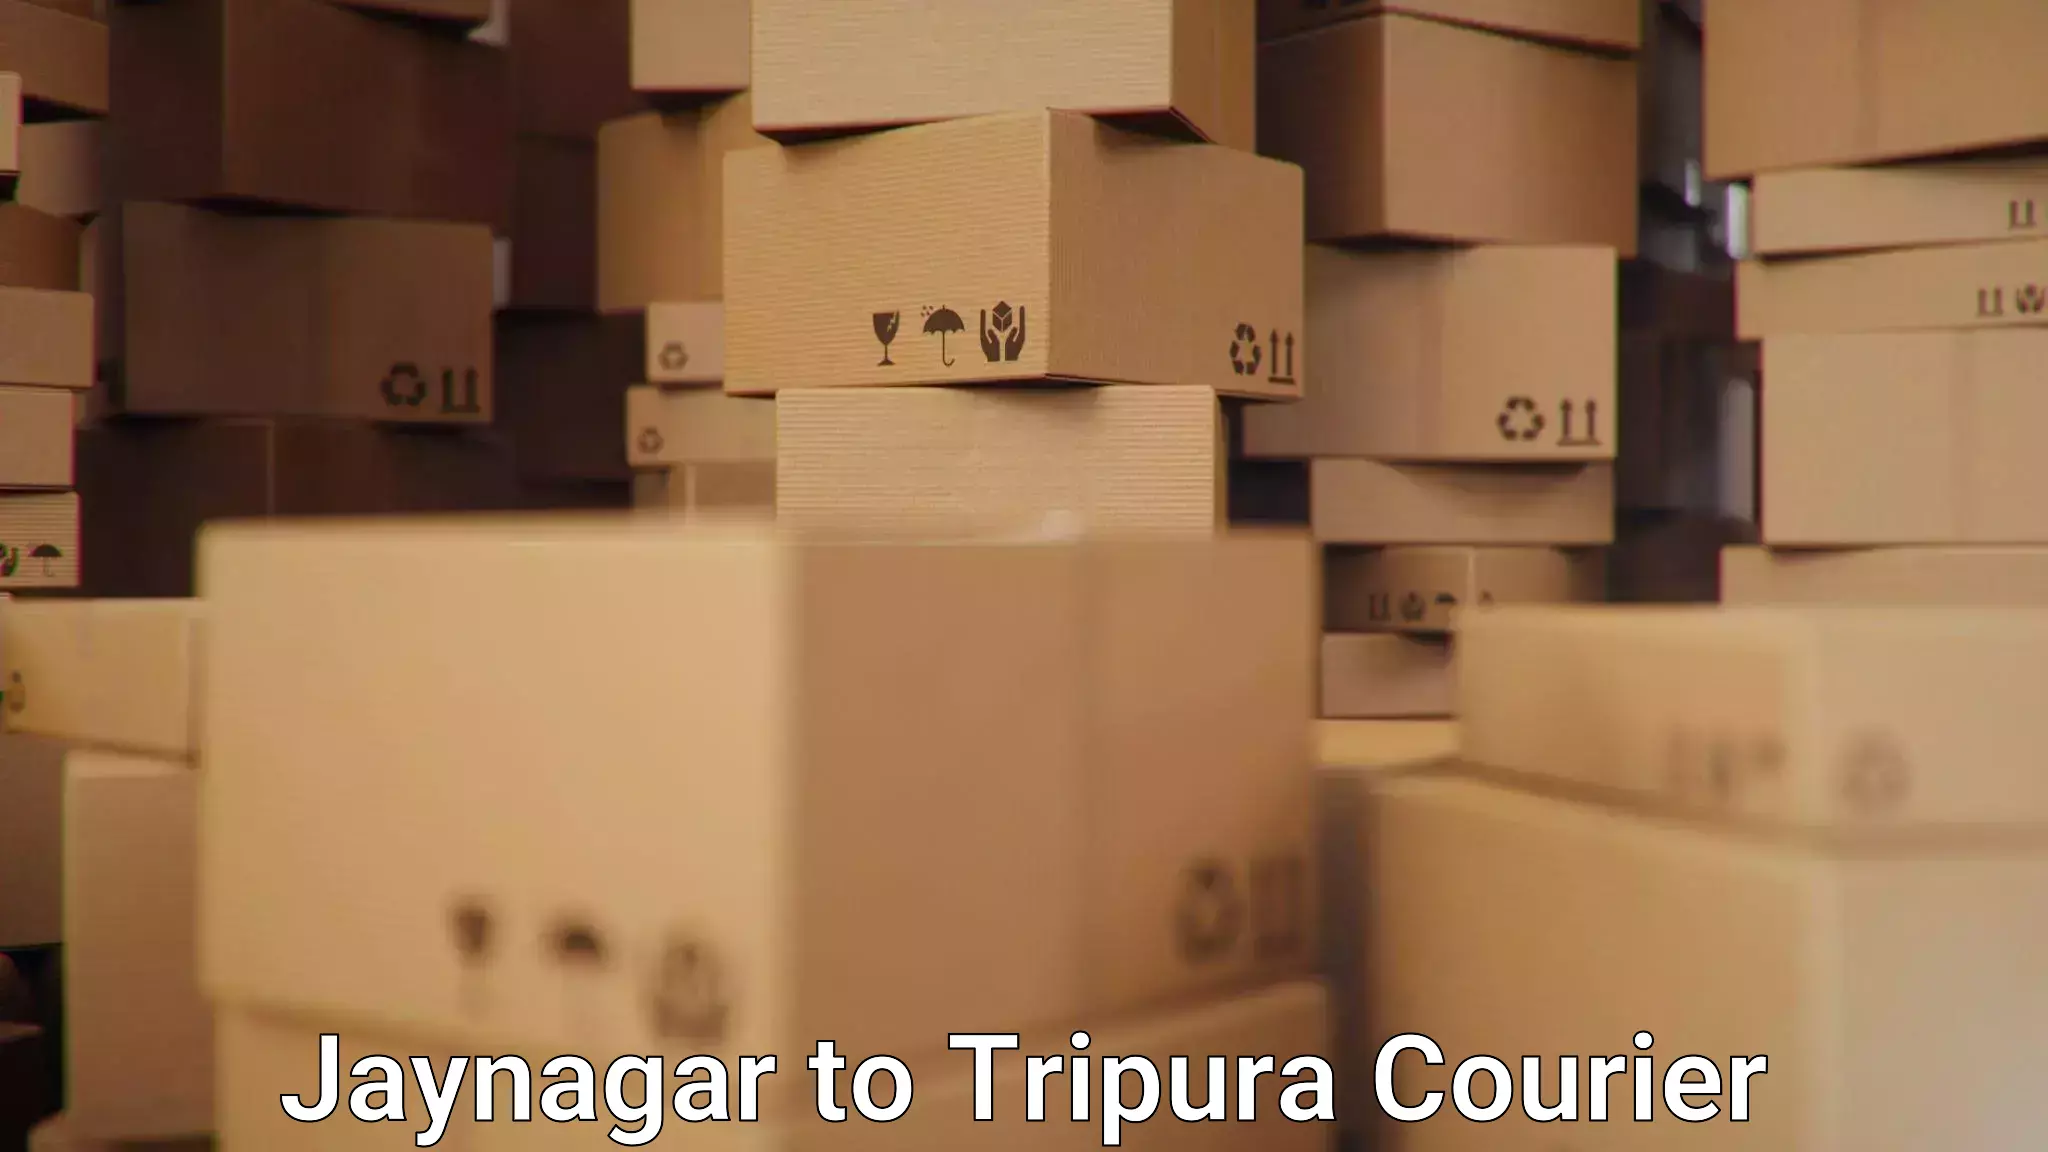 Express mail service in Jaynagar to Udaipur Tripura